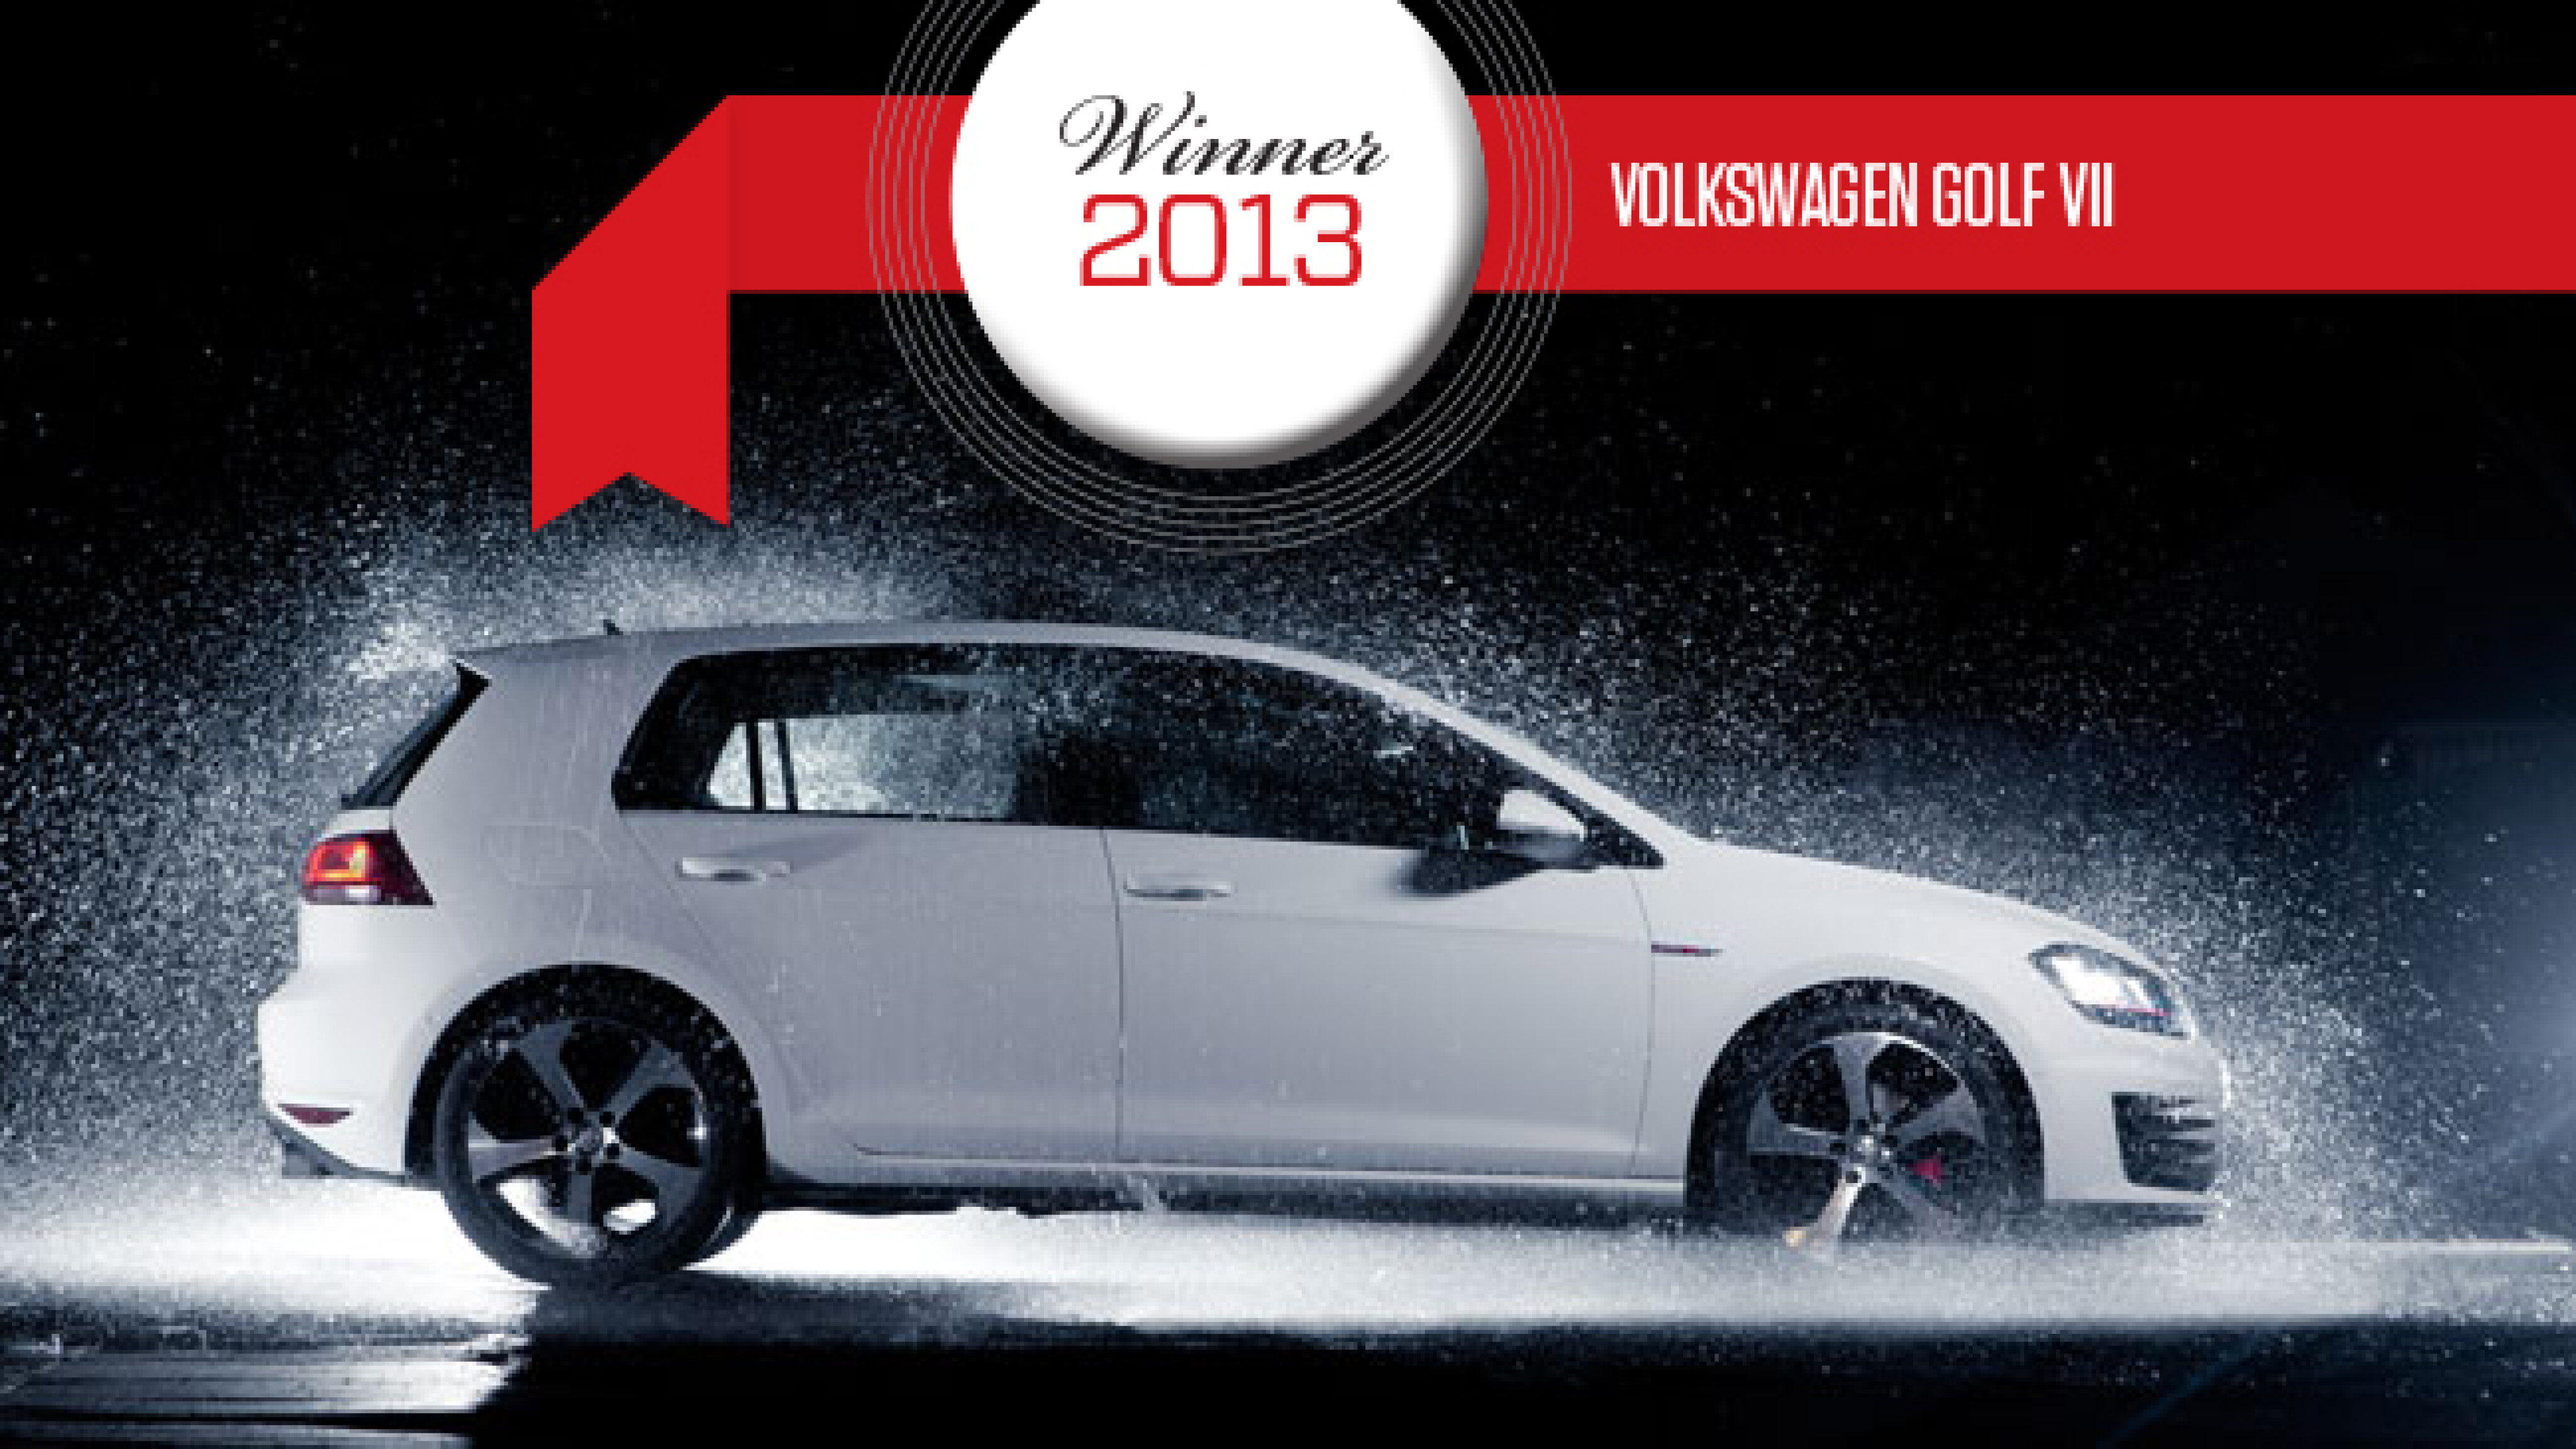 Volkswagen Golf VI: A deserving winner - The Car Guide